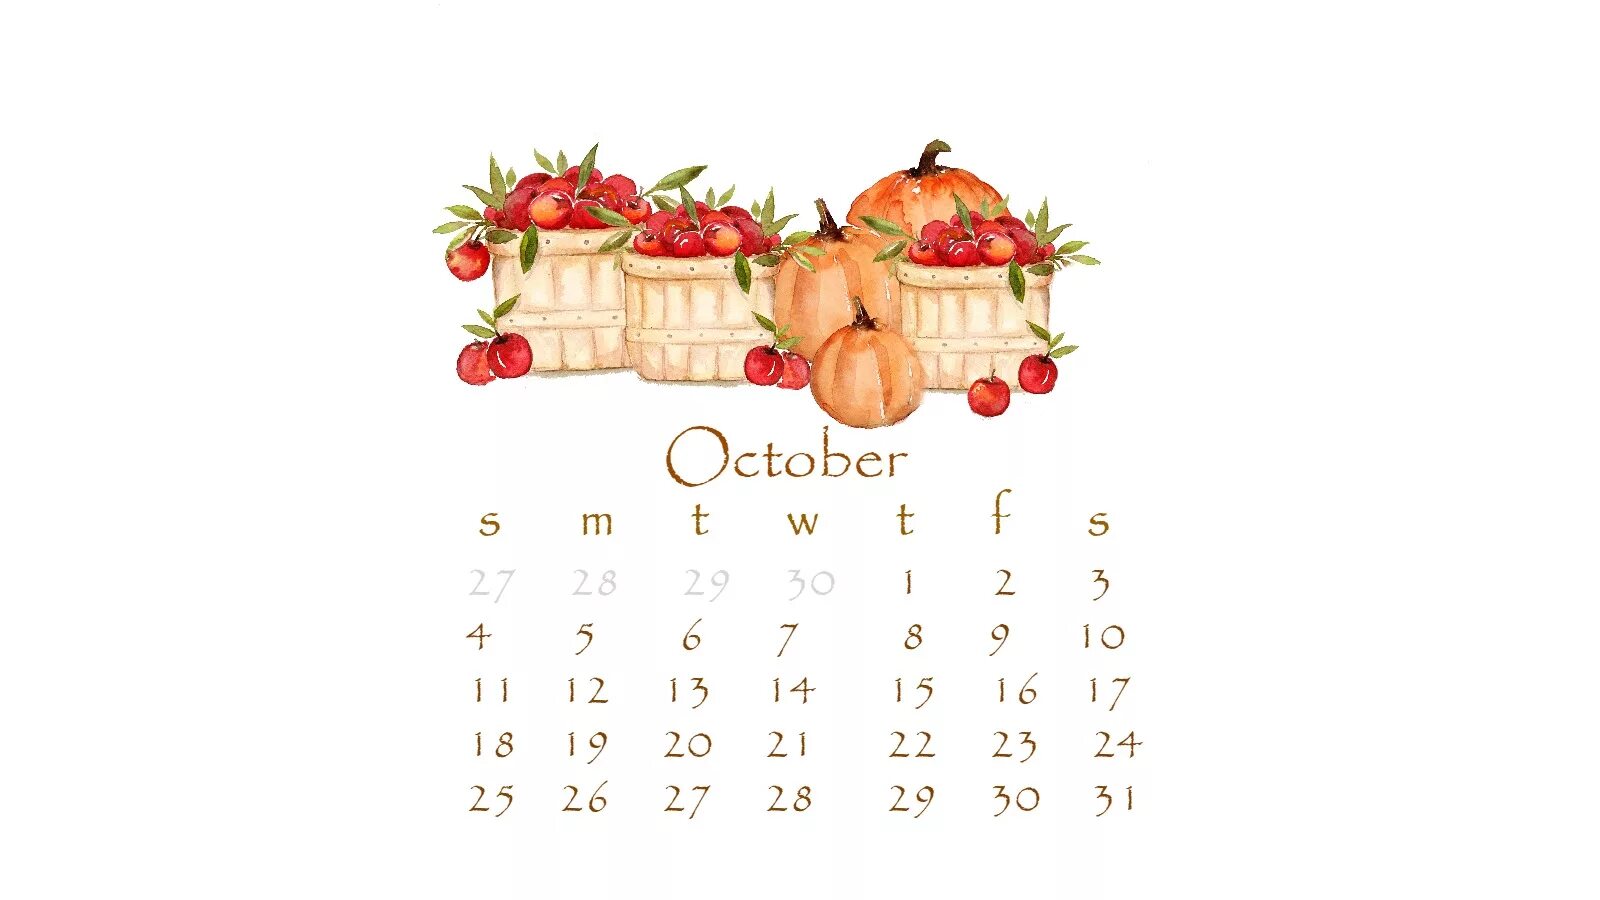 This month s. Красивый календарь. Календарь обои. Календарь октябрь на прозрачном фоне. Календарь рисунок красивый.